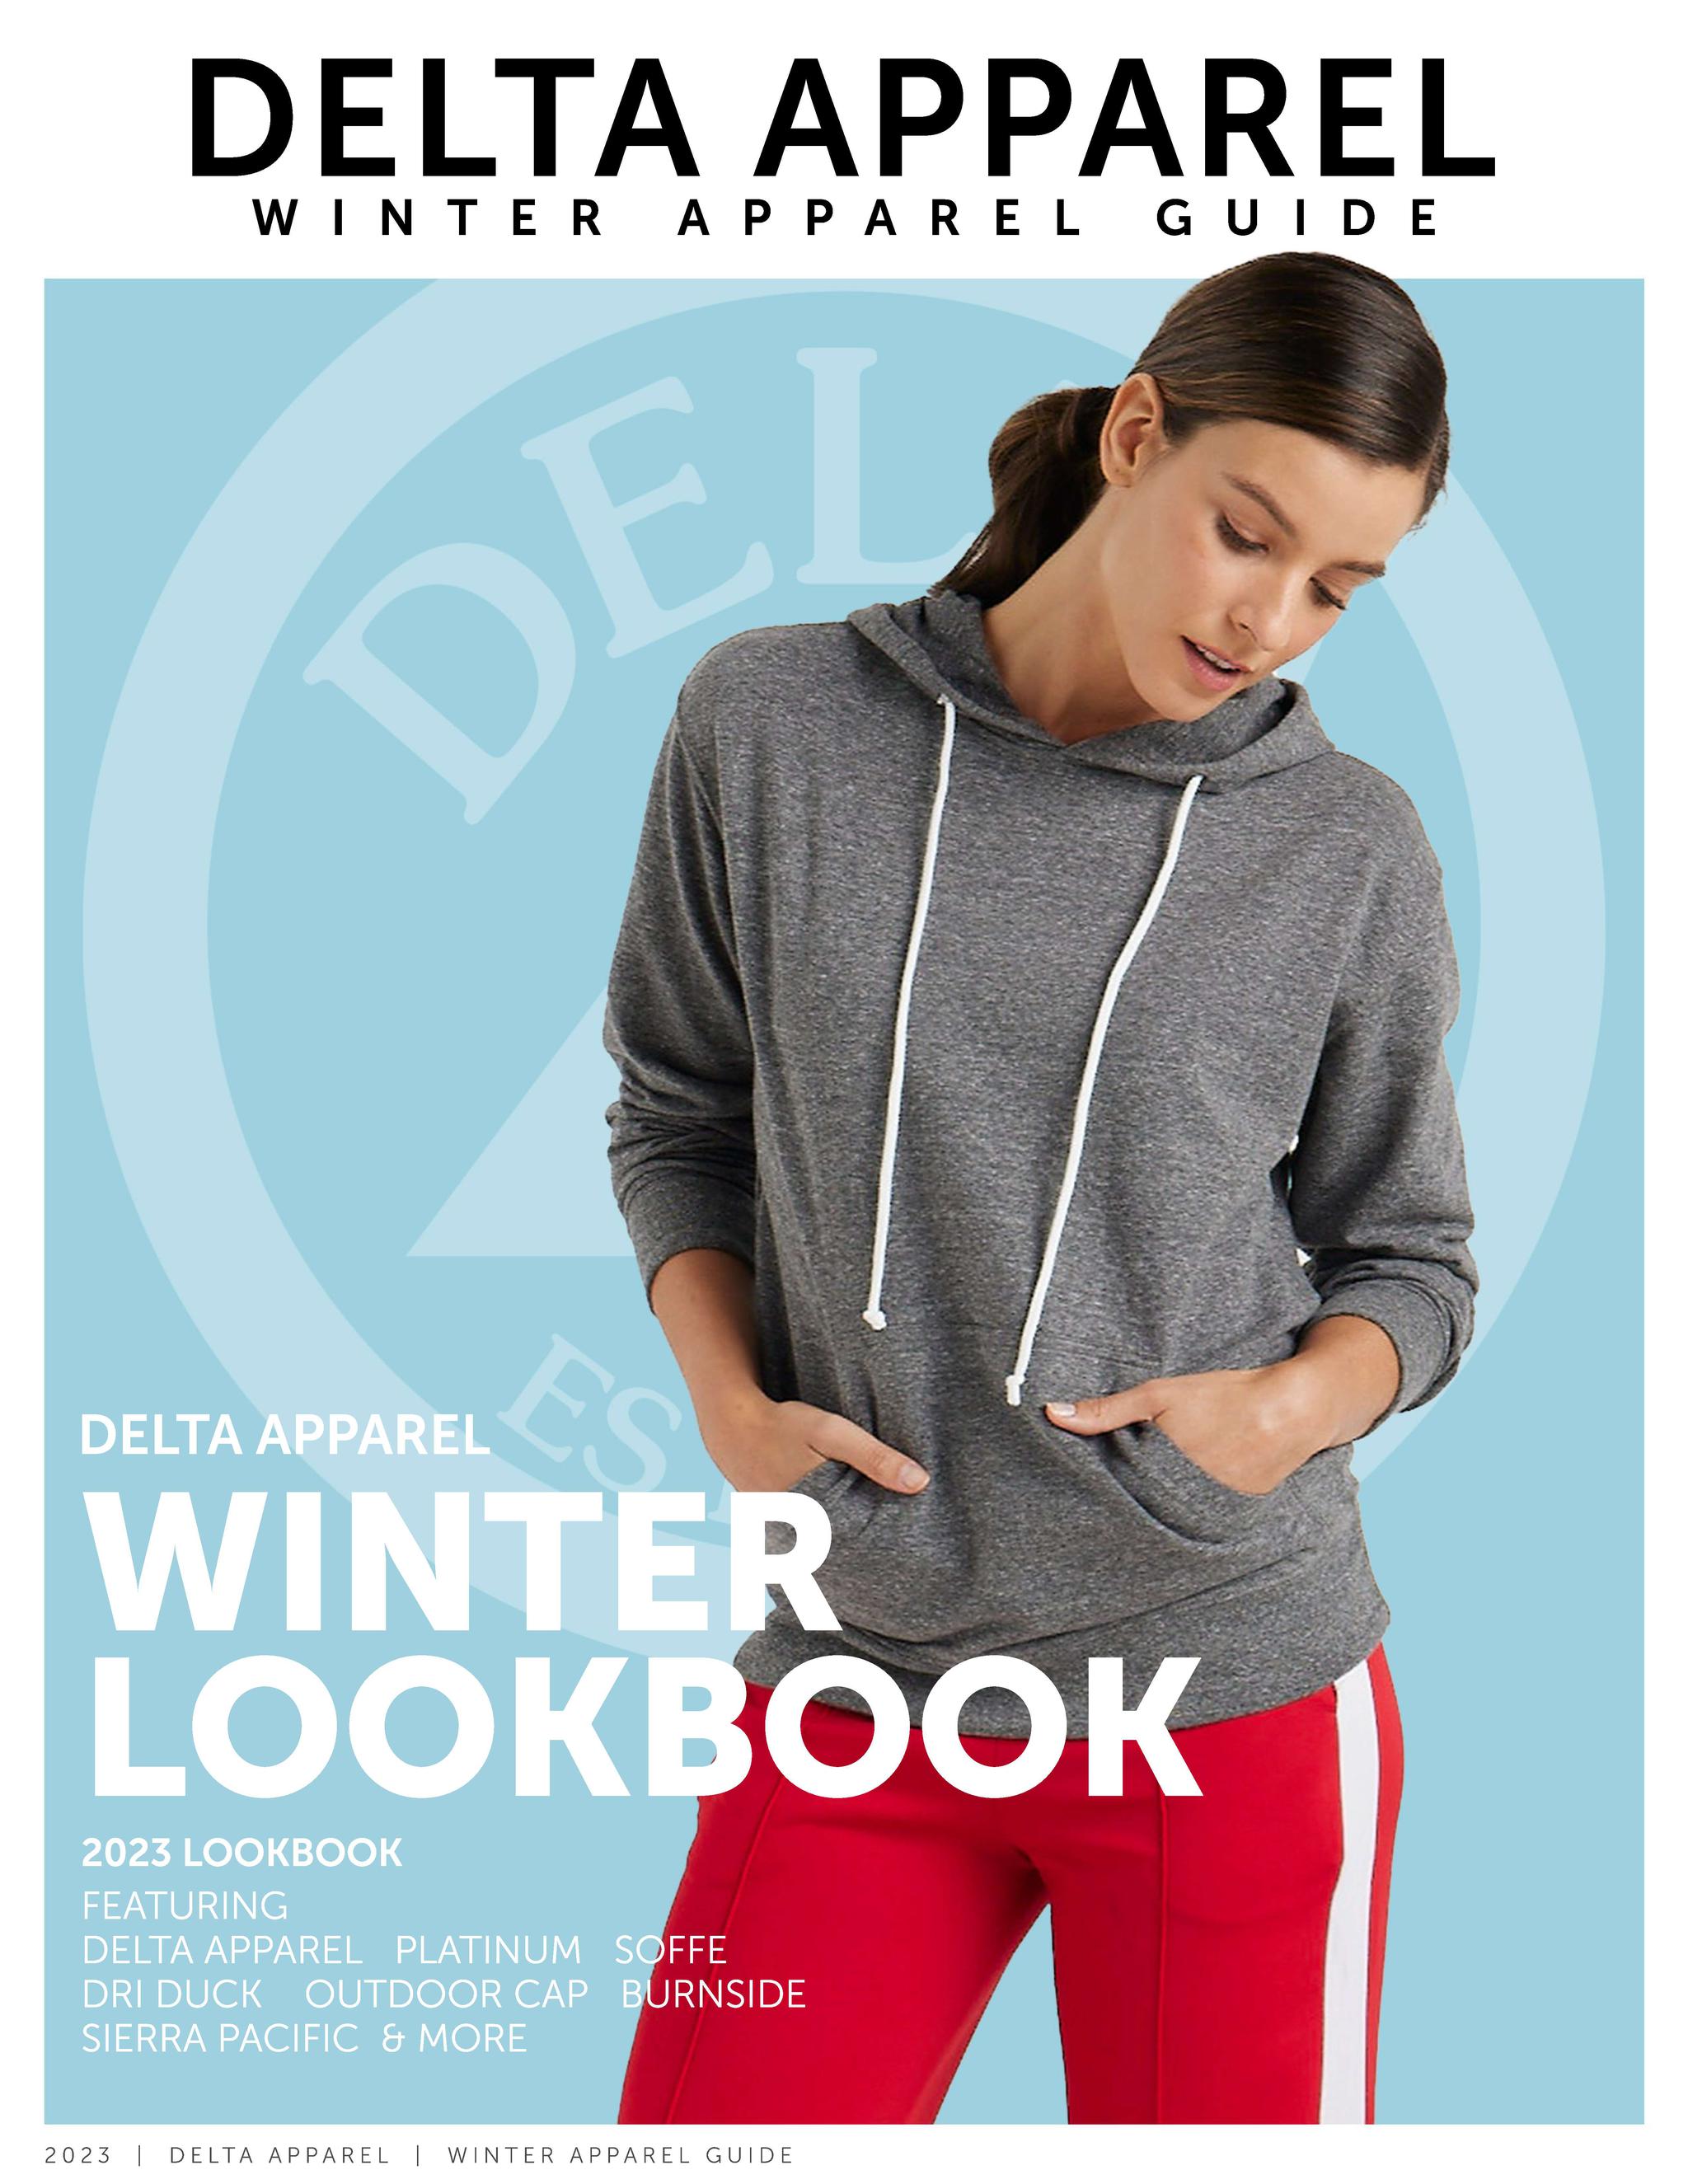 Delta Apparel Winter Lookbook Guide